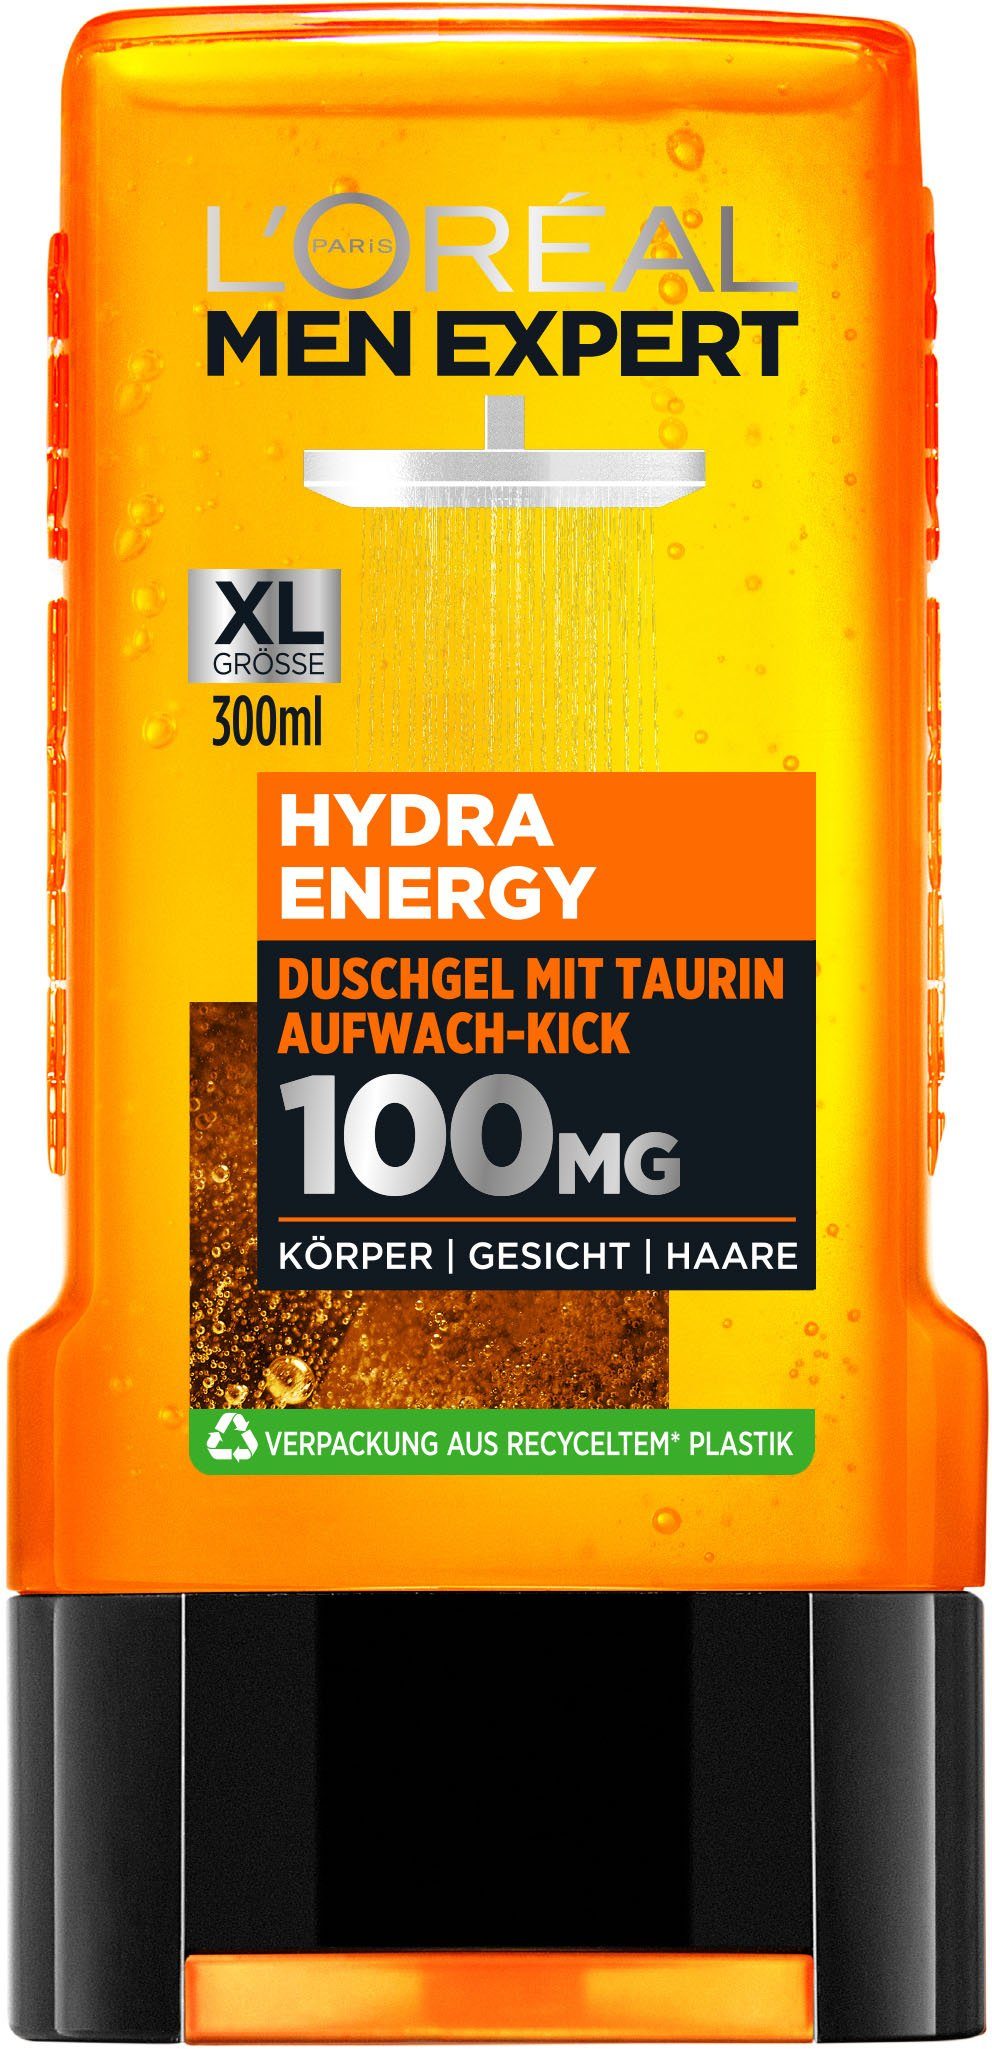 PARIS Hydra MEN Energy EXPERT L'ORÉAL Duschgel